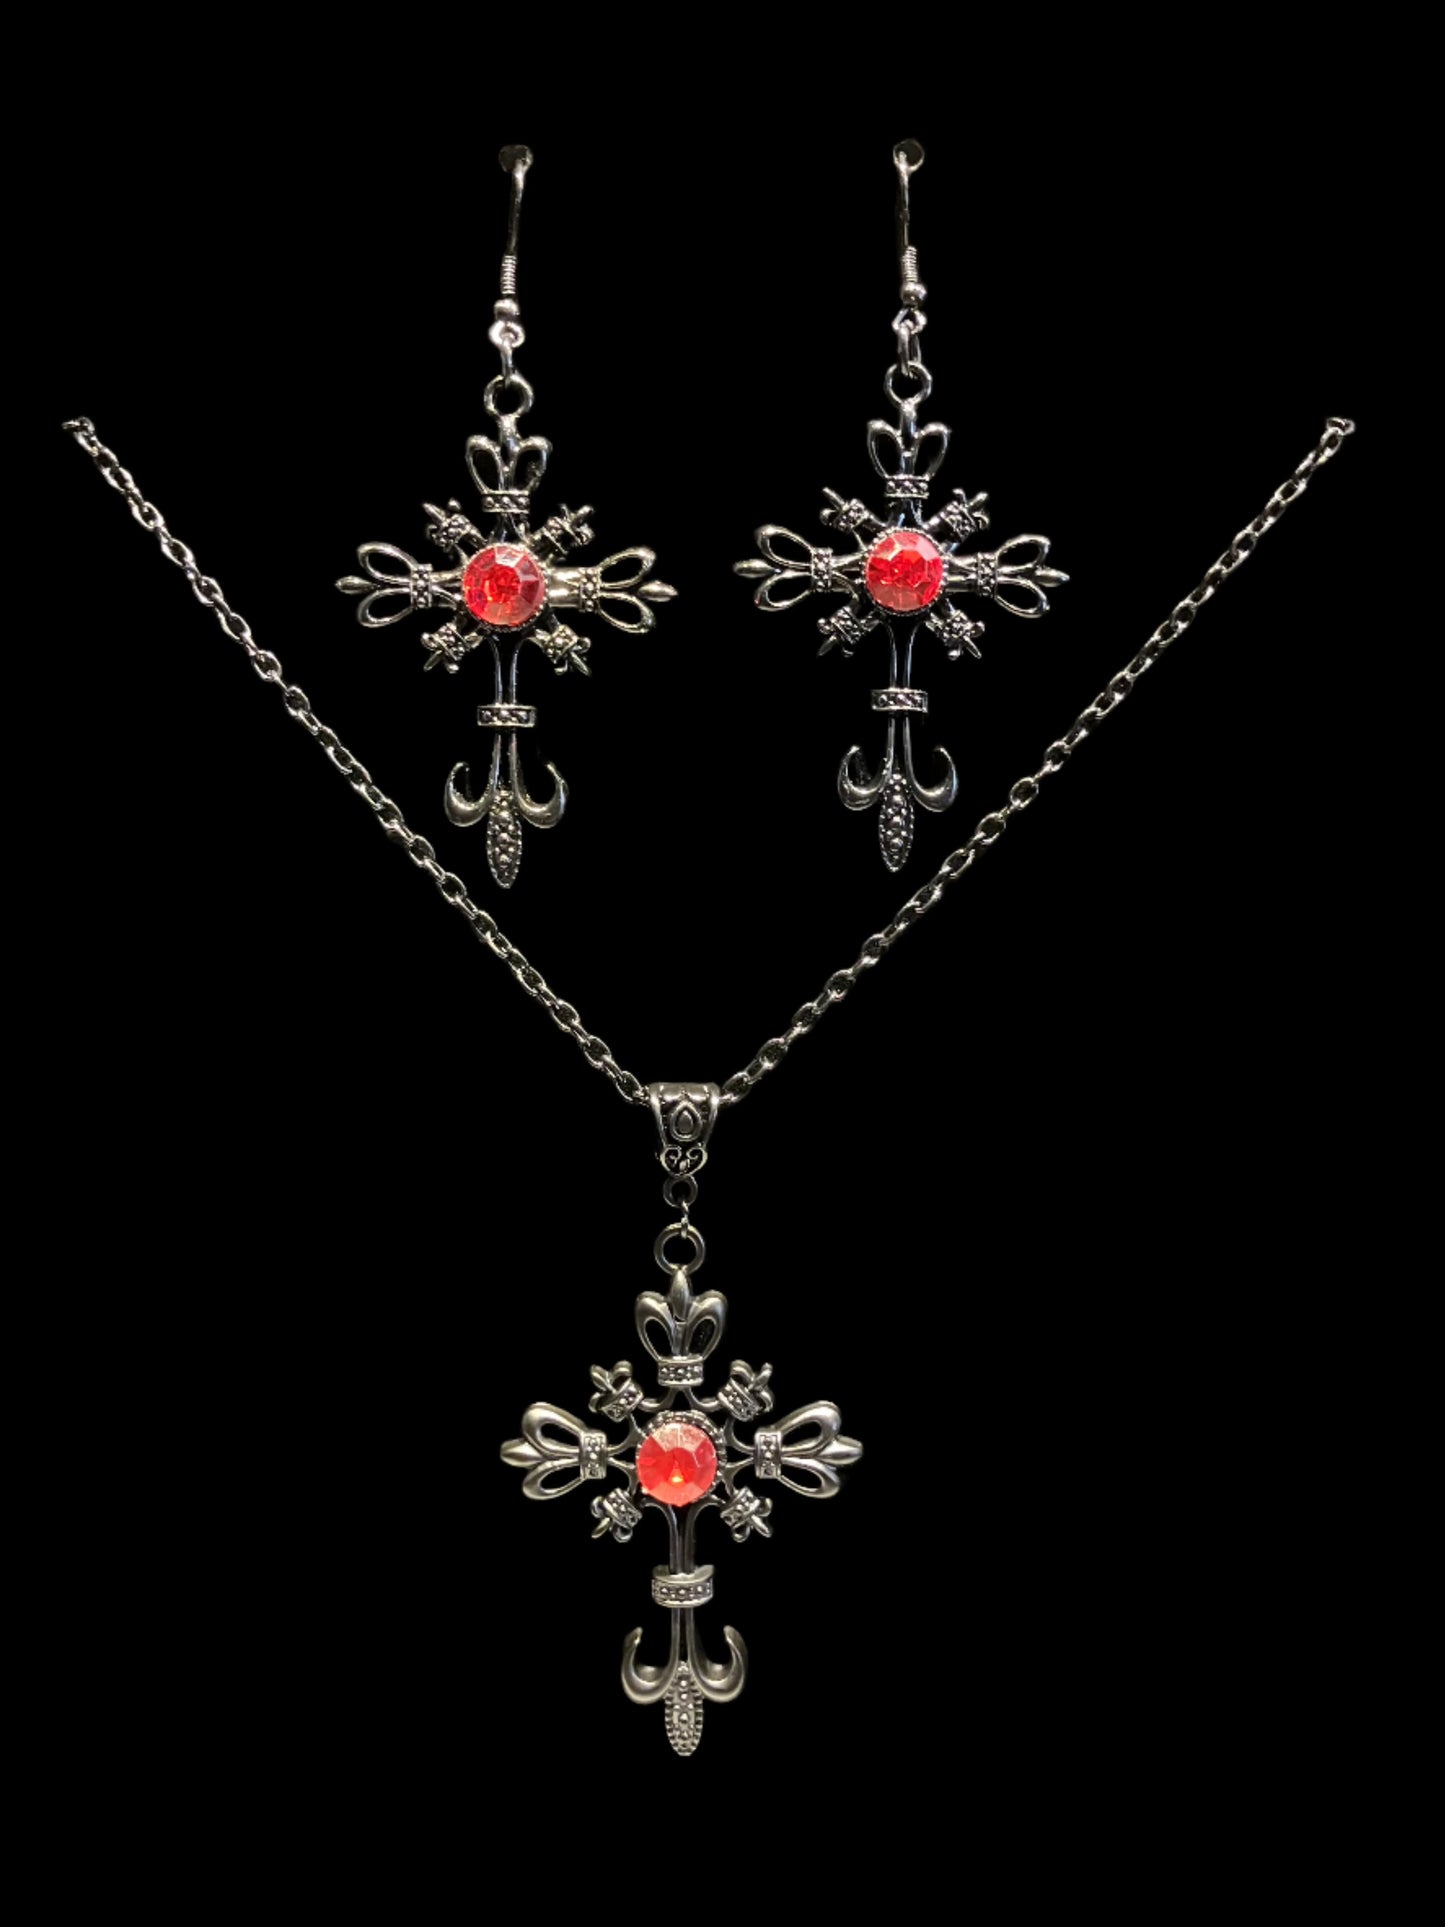 The Vatican Jewelry Set